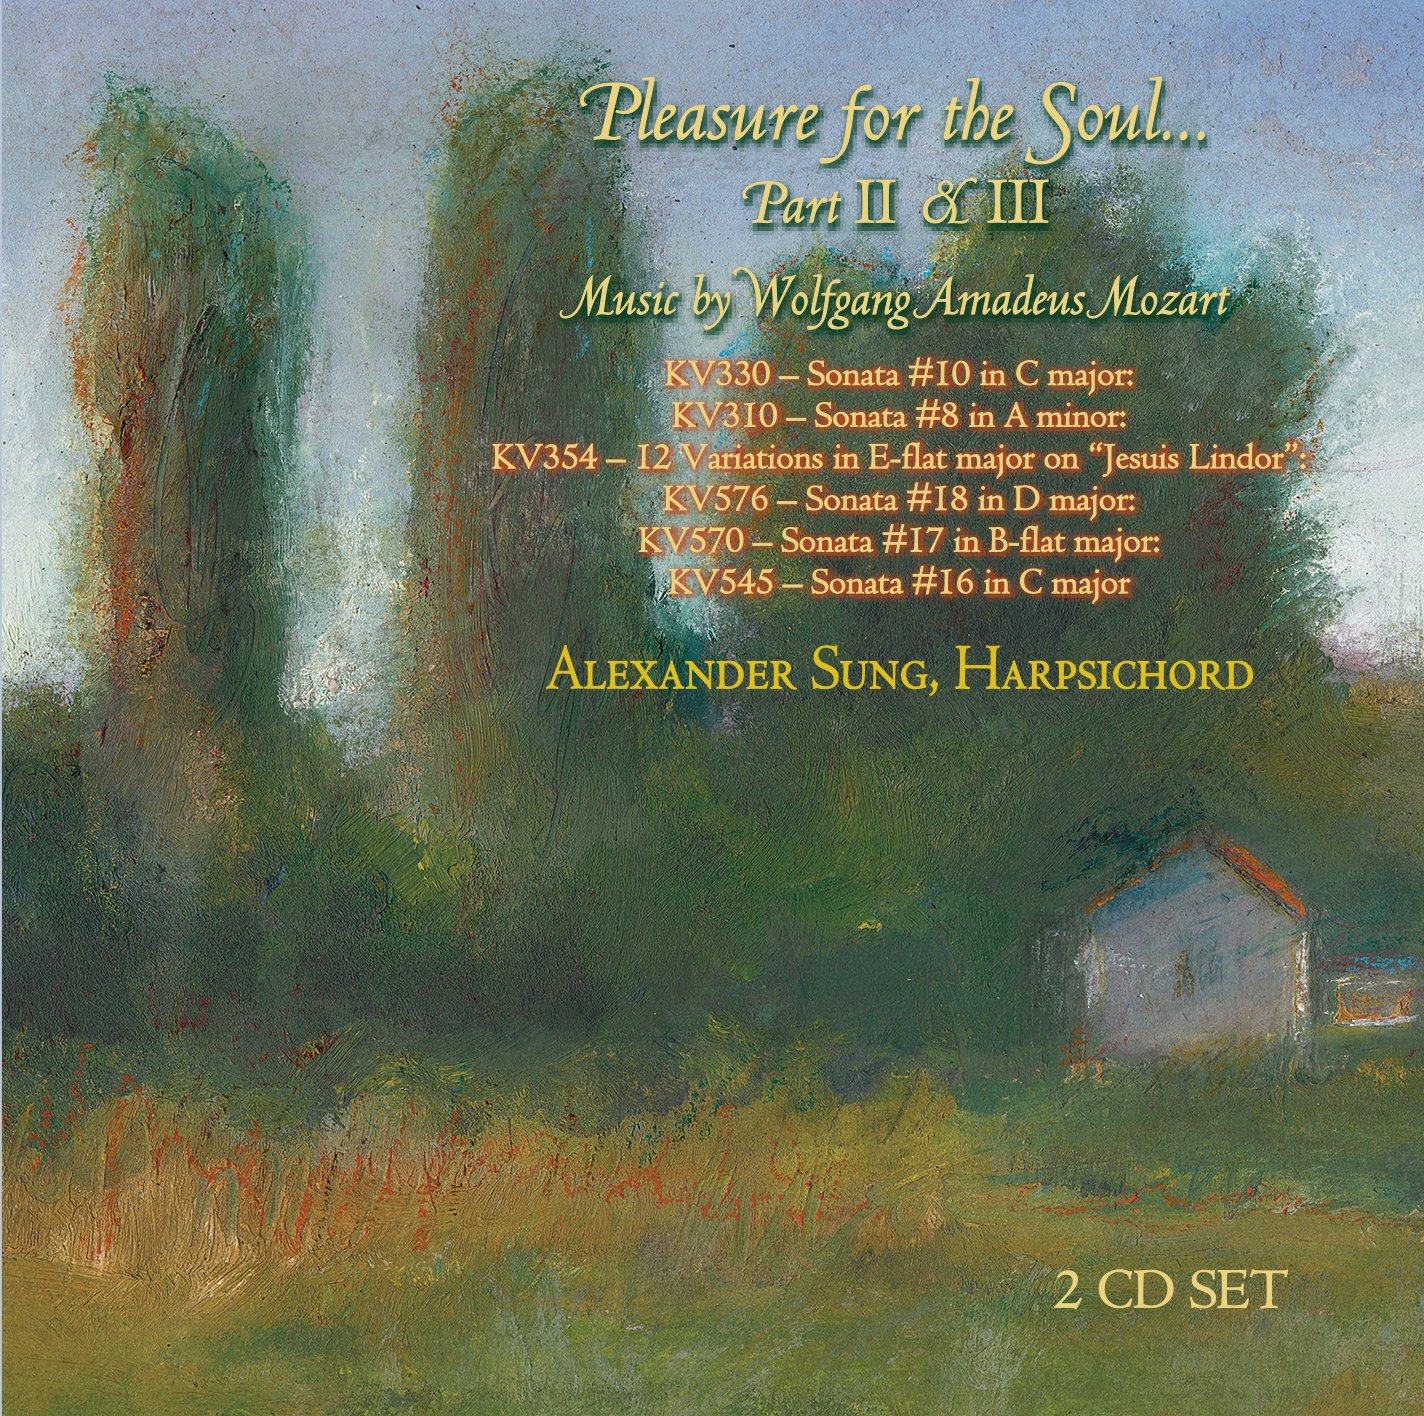 Pleasure for the Soul: Harpsichord Music of Wolfgang Amadeus Mozart (Parts II & III)